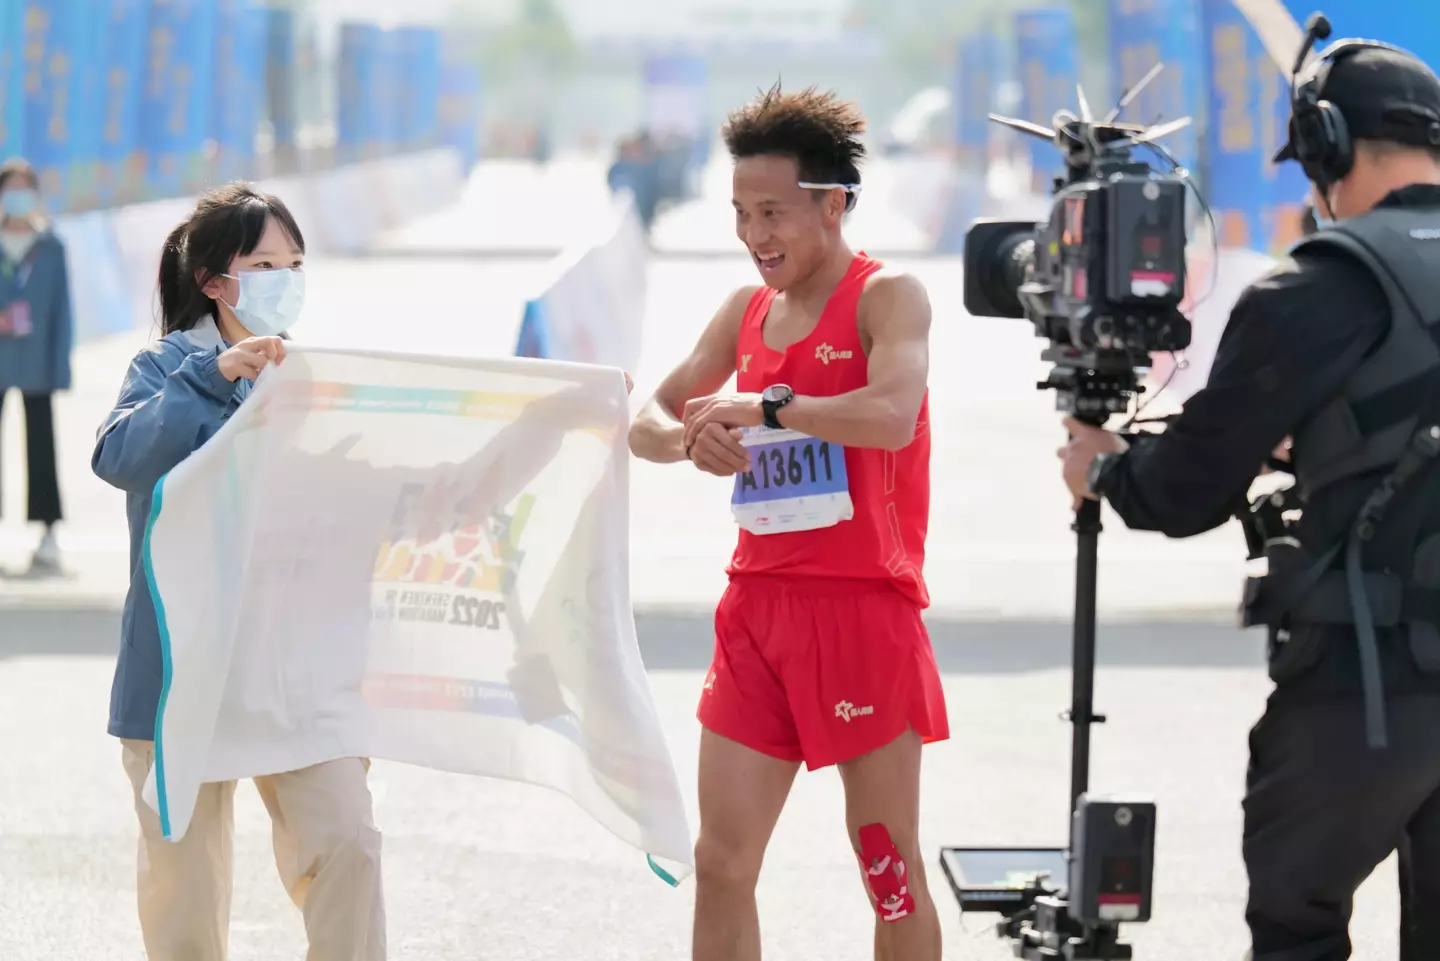 He Jie is a marathon runner. (Chen Wen/China News Service/VCG via Getty Images)